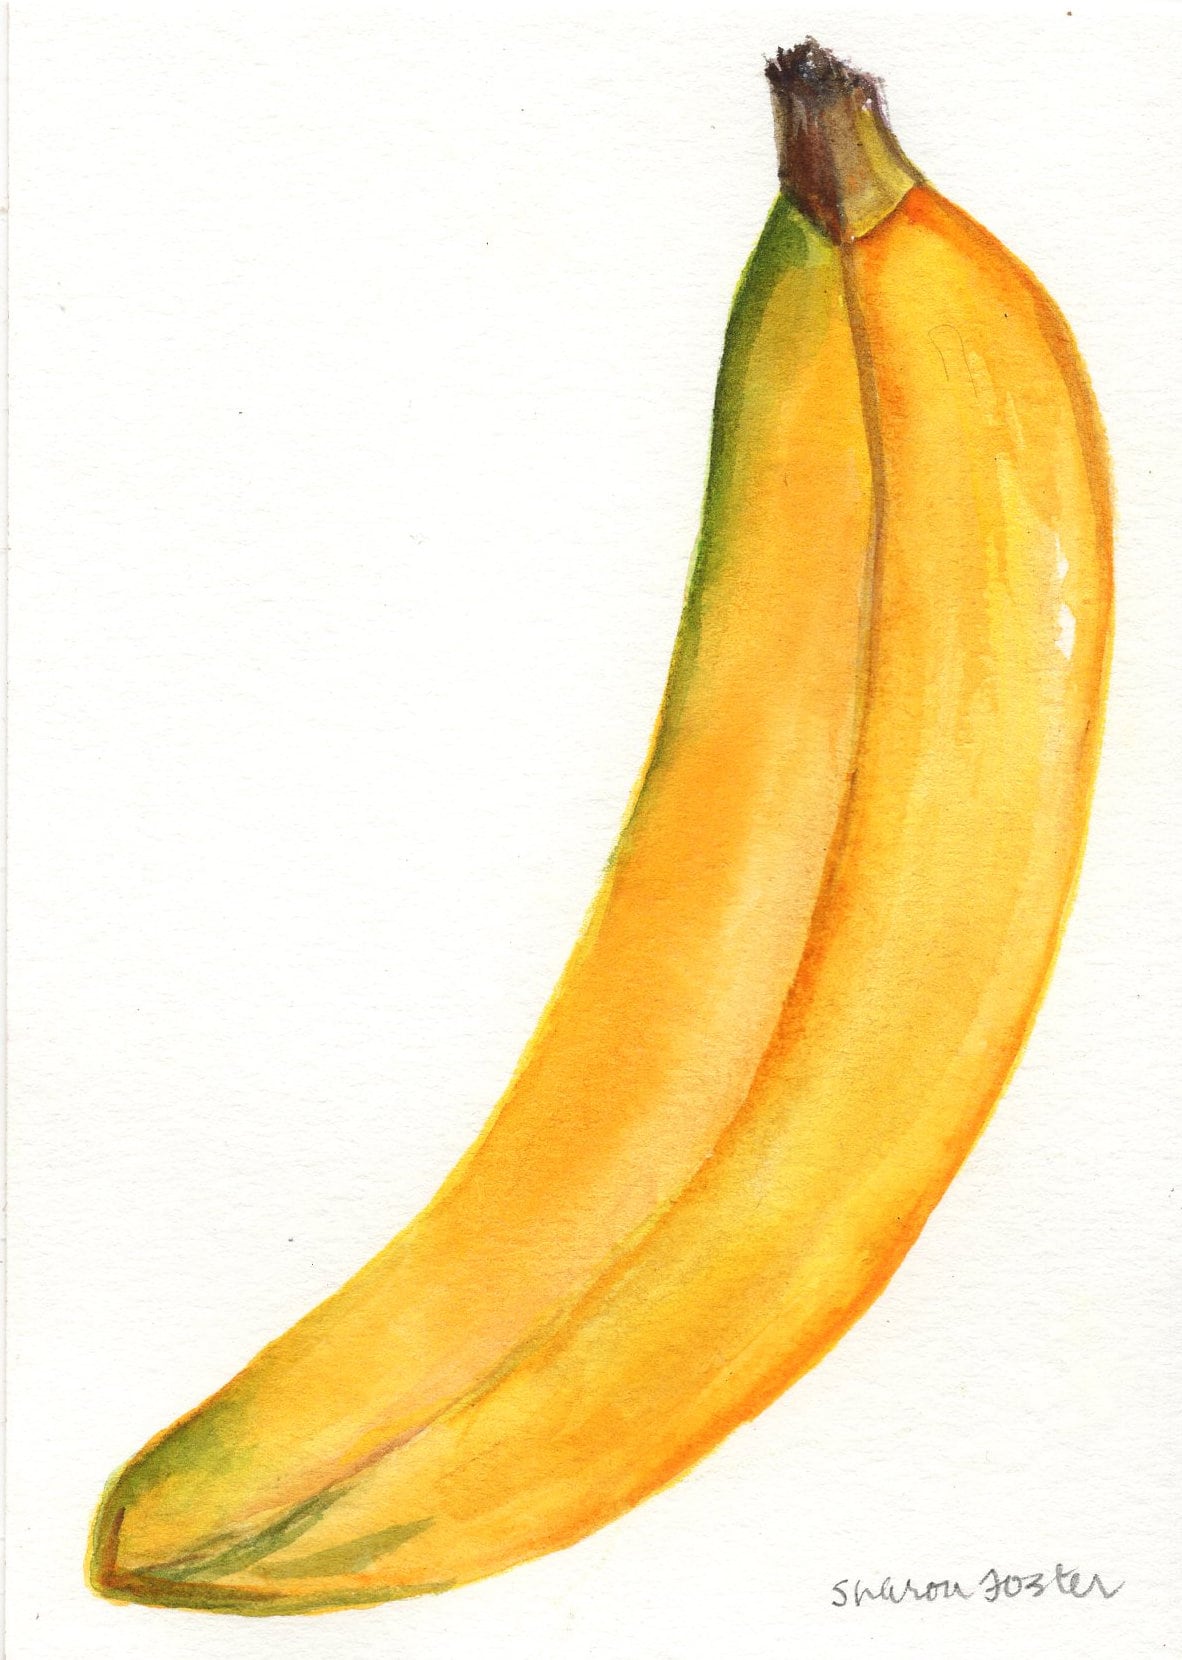 Banana colour pencil drawing by MothyBall on DeviantArt